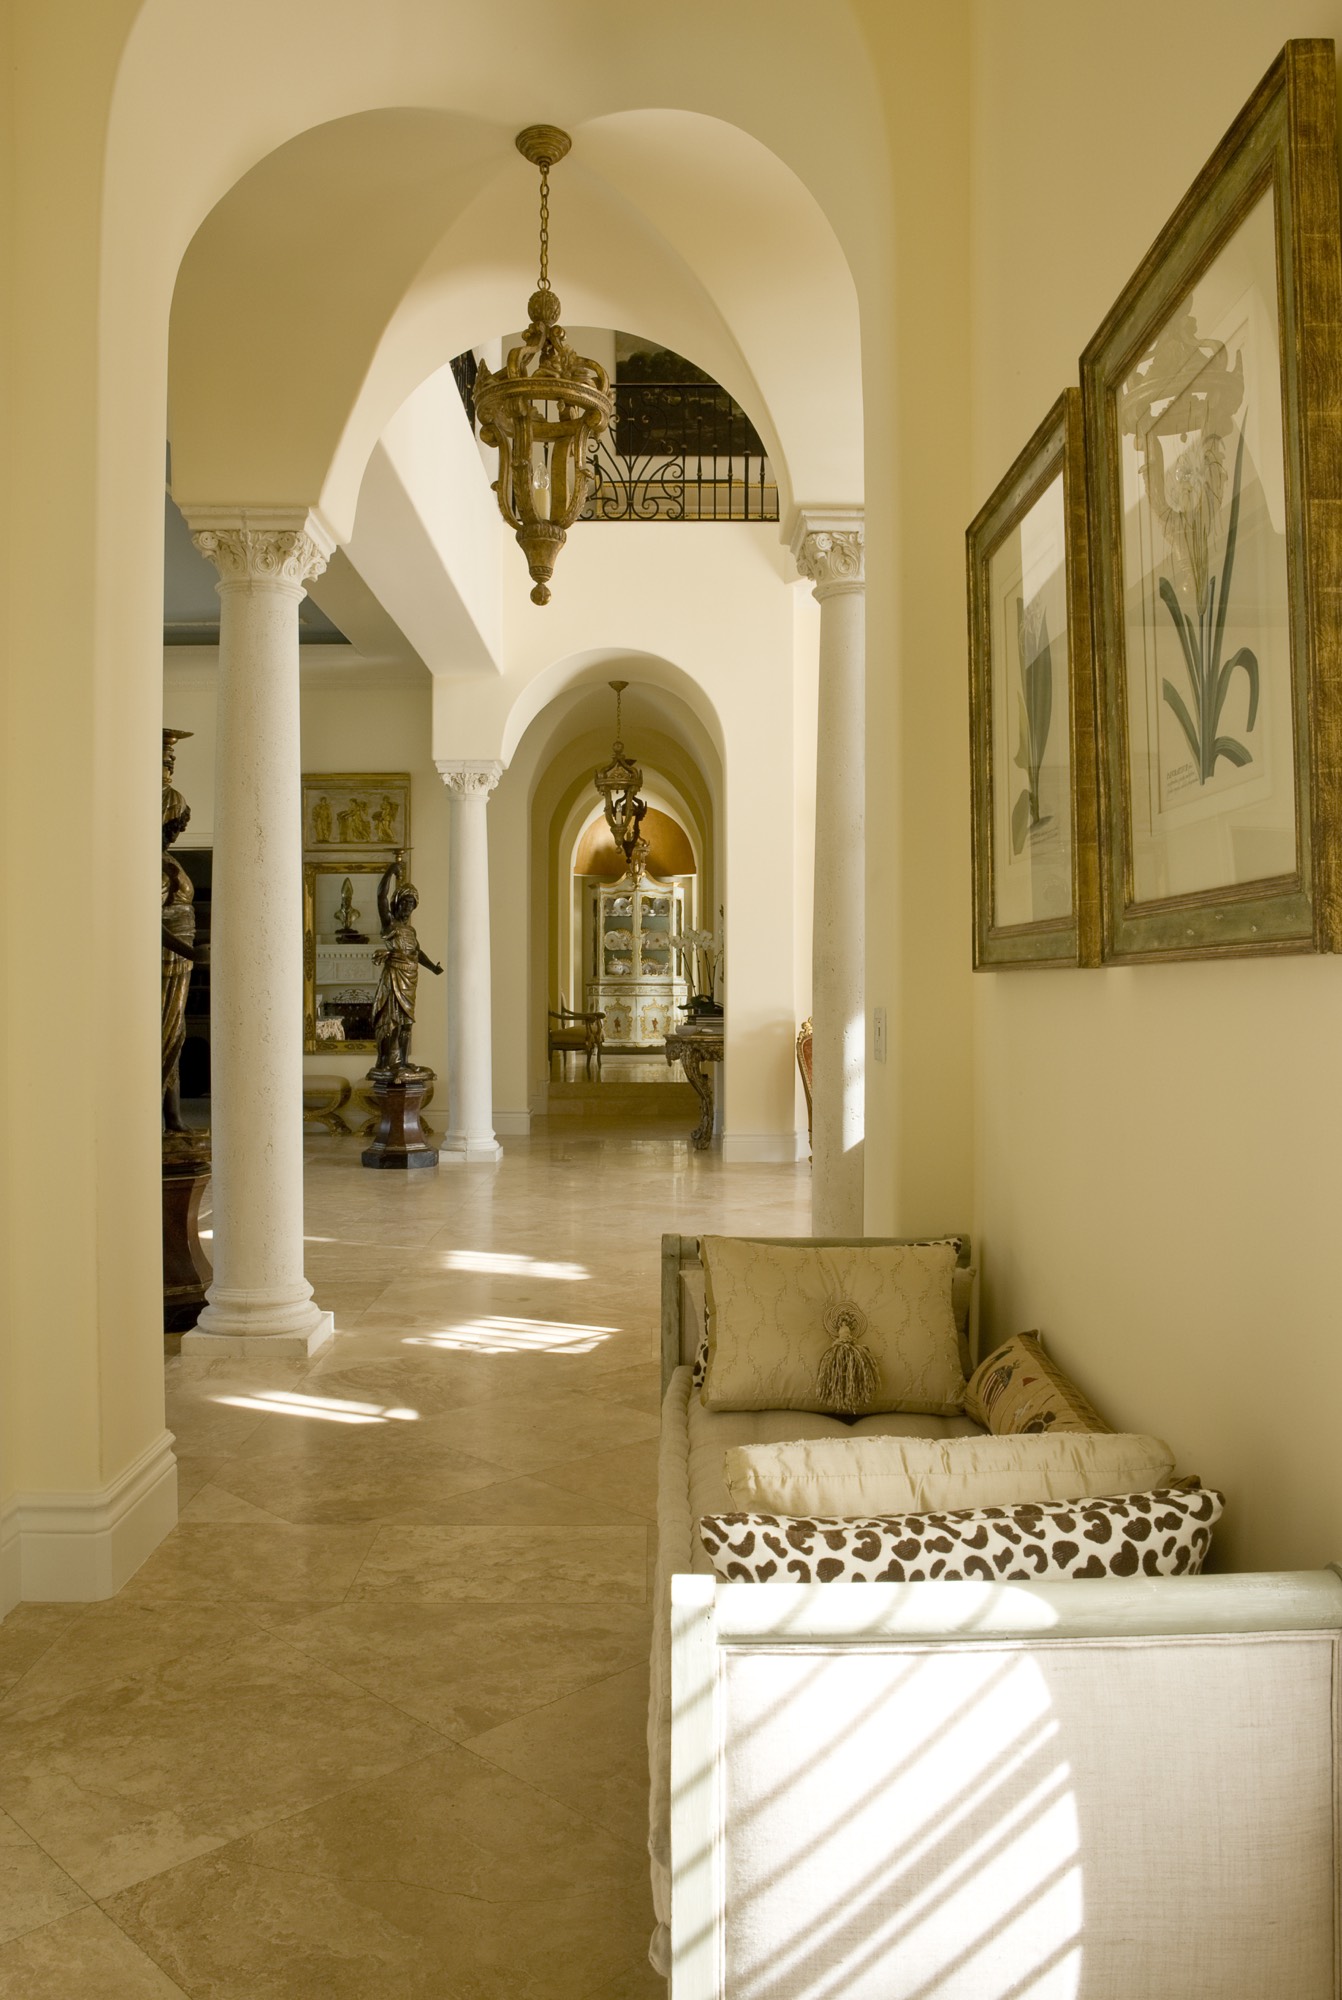 Tracy Morris Design Interiors - Hallway